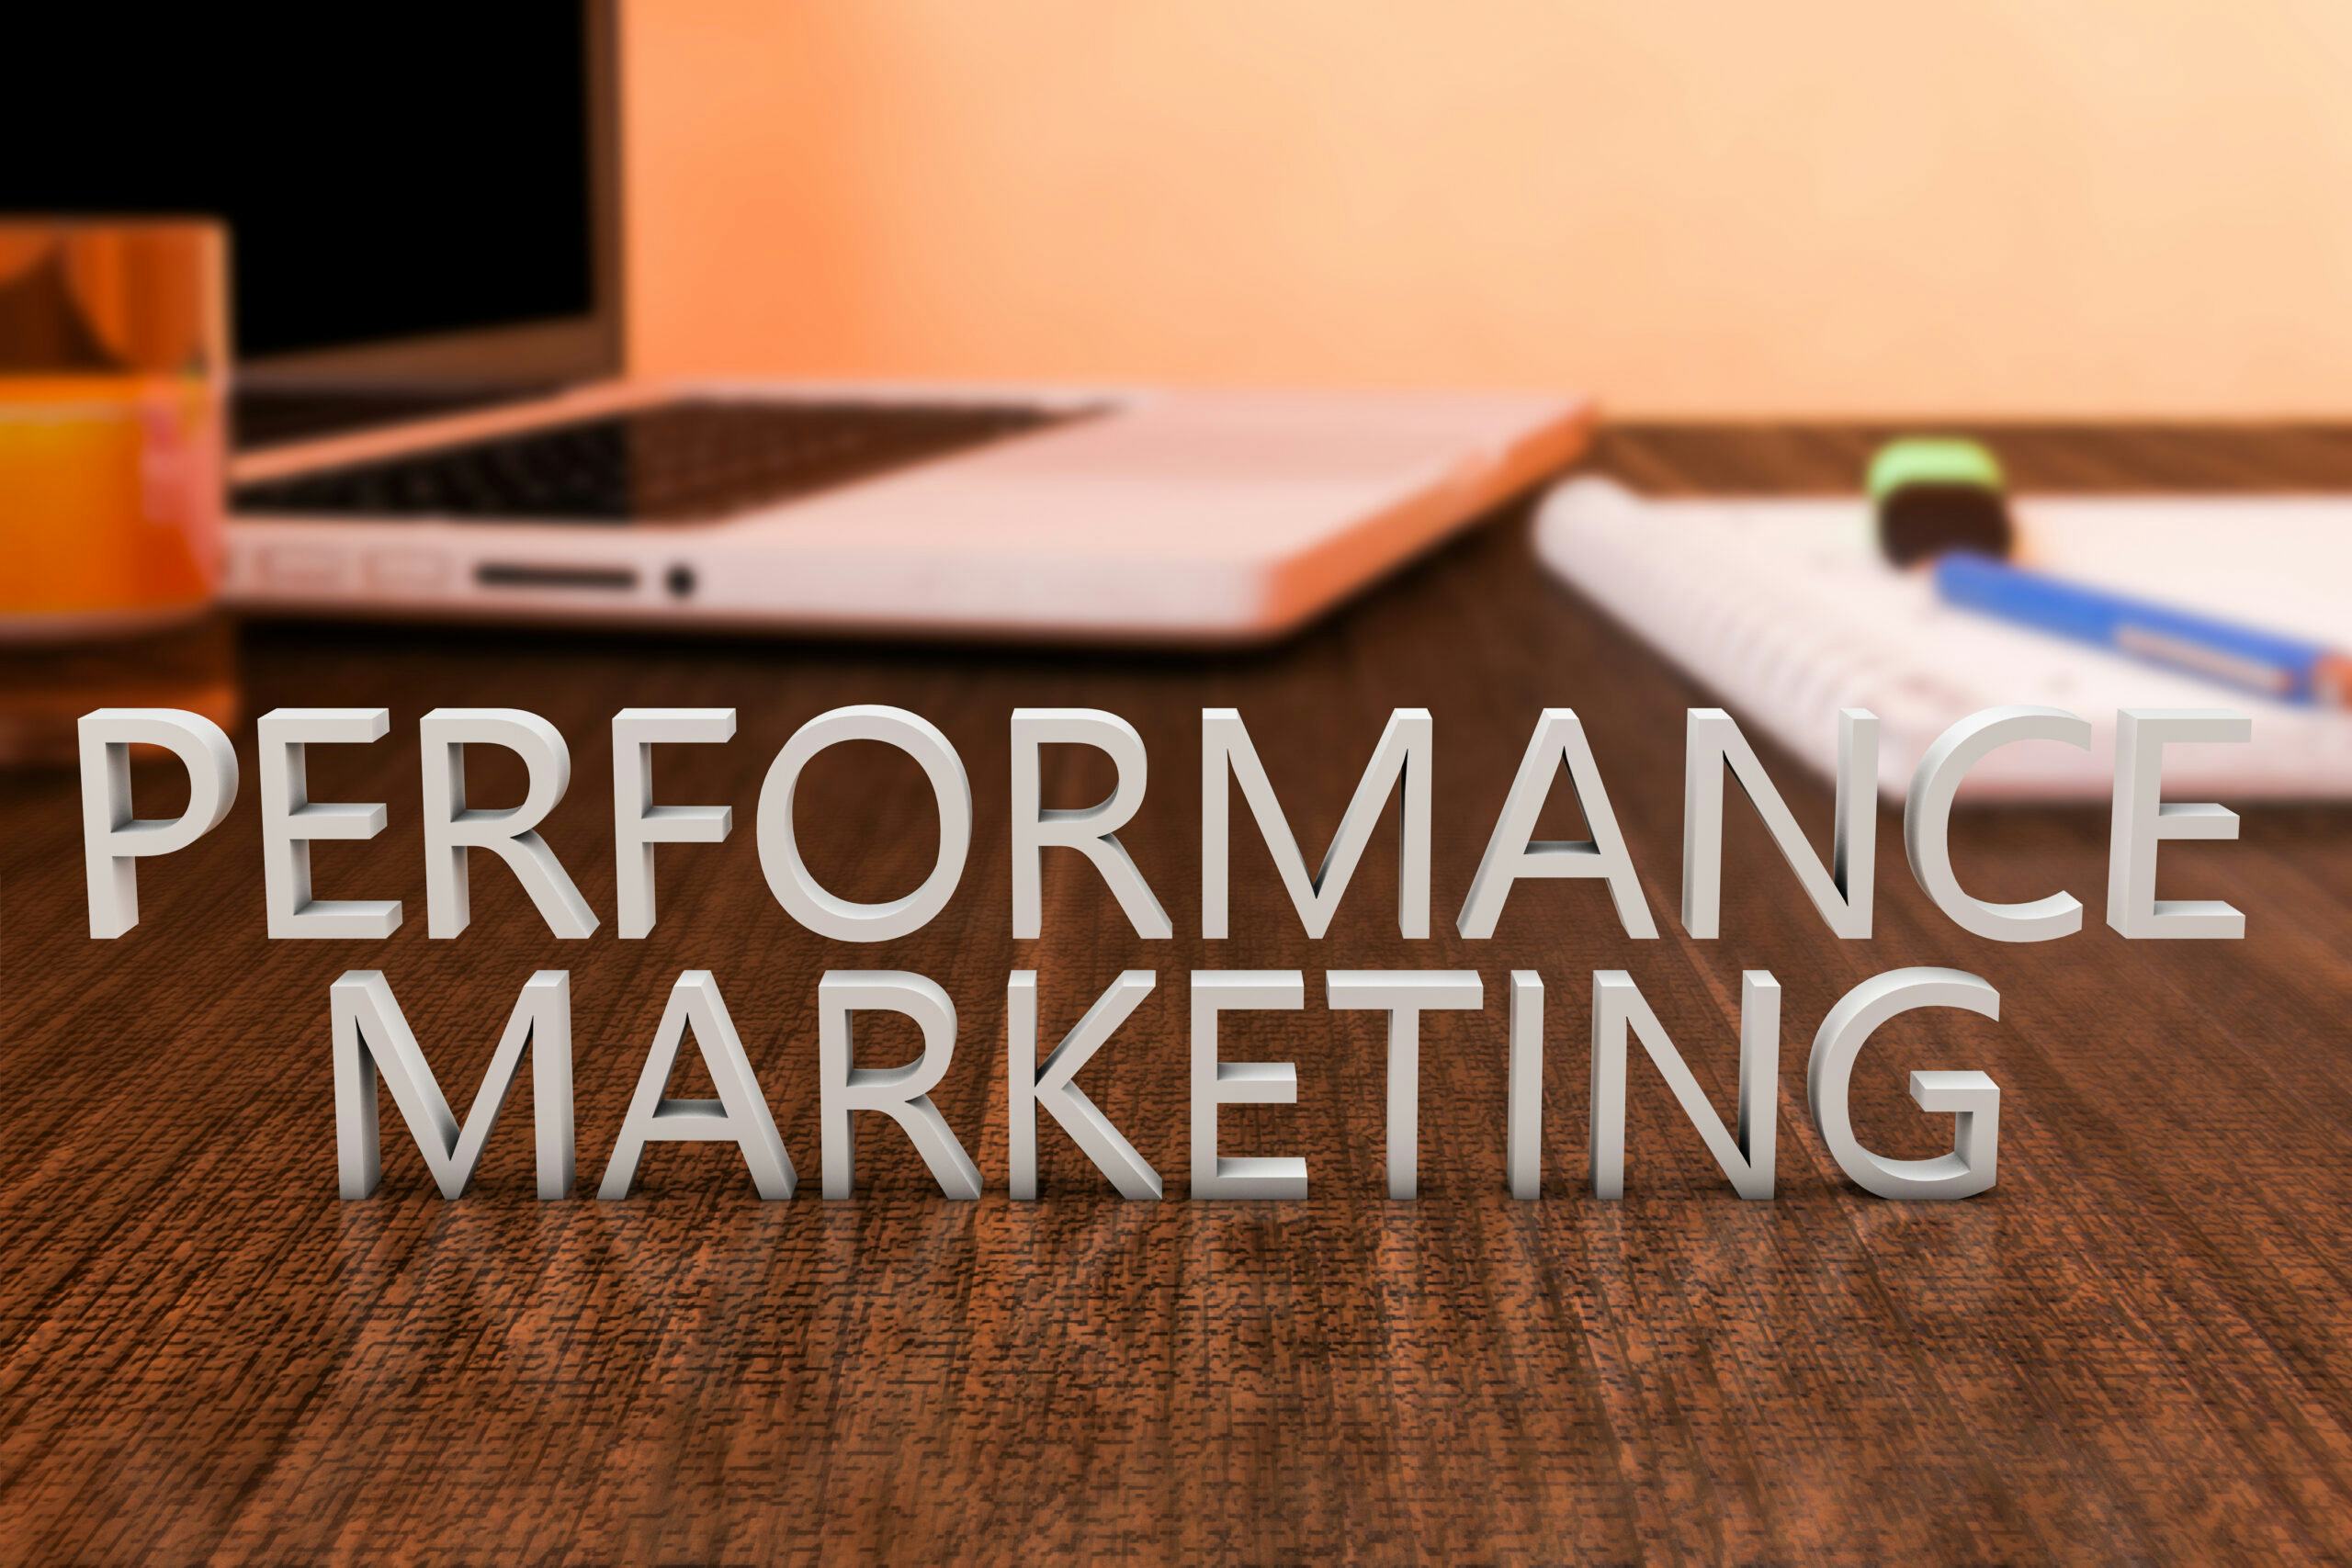 Performance marketeer